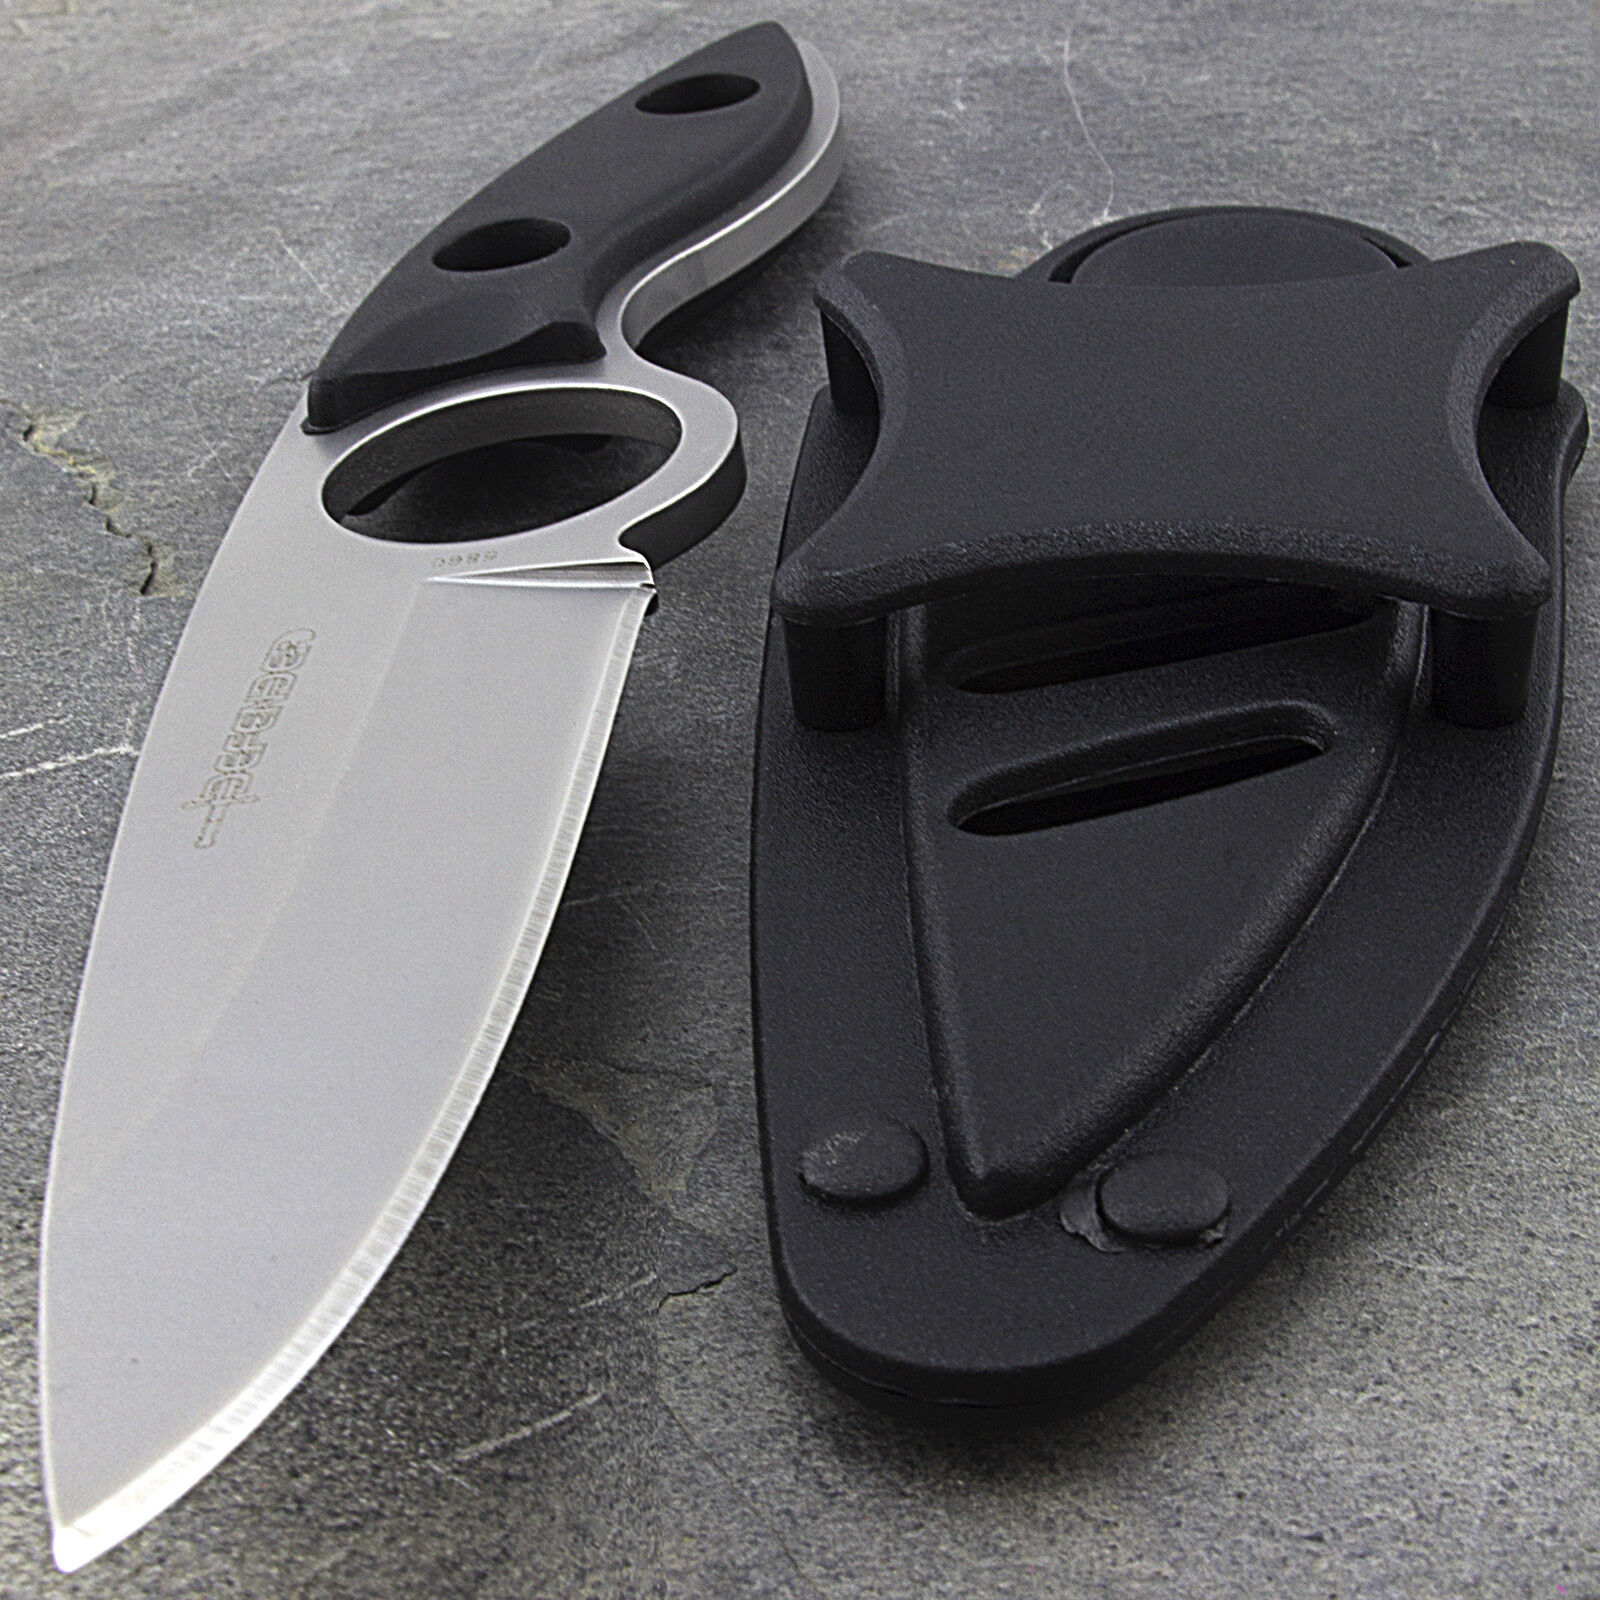 7" FULL TANG SURVIVAL BOOT KNIFE w/ NECK SHEATH Hunting Camping Skinning Combat Defender 5860